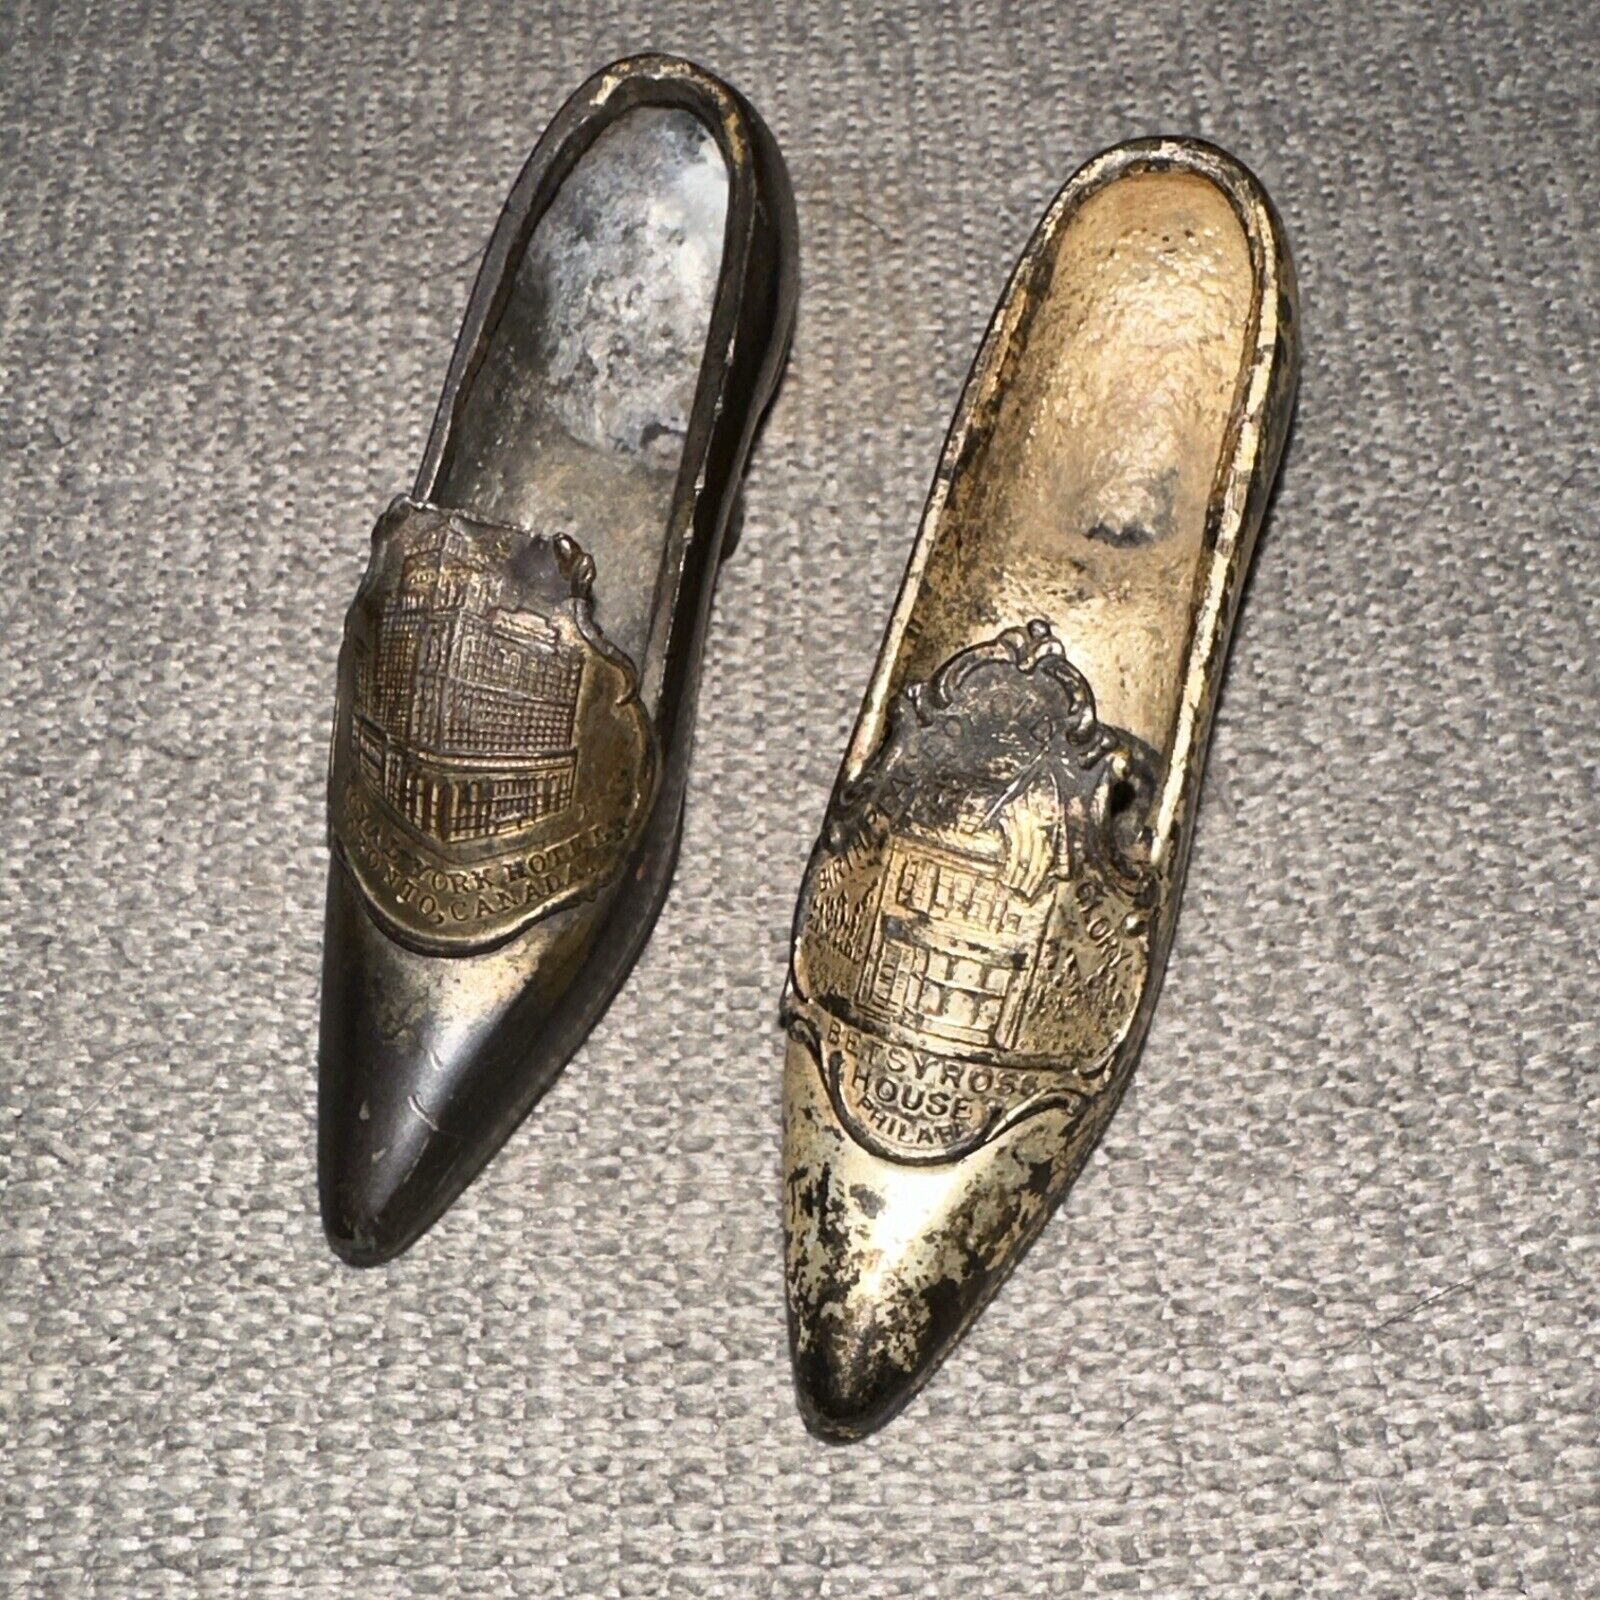 2 Antique Vintage Metal Shoe Pin Cushions SOUVENIR Betsy Ross house & Canada